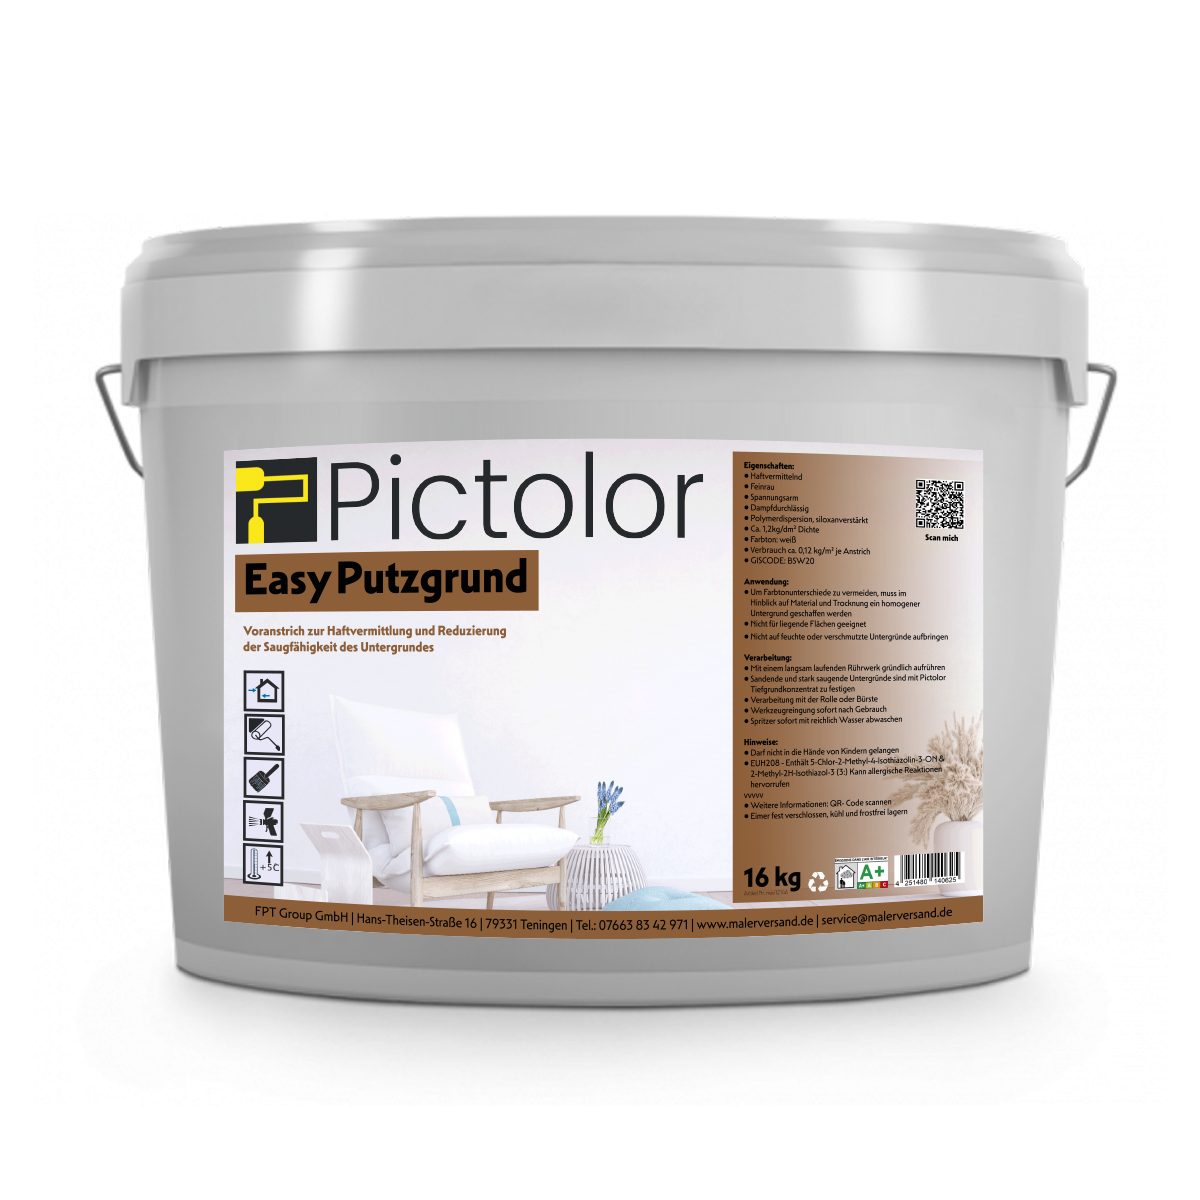 Pictolor® Easy Putzgrund von Pictolor